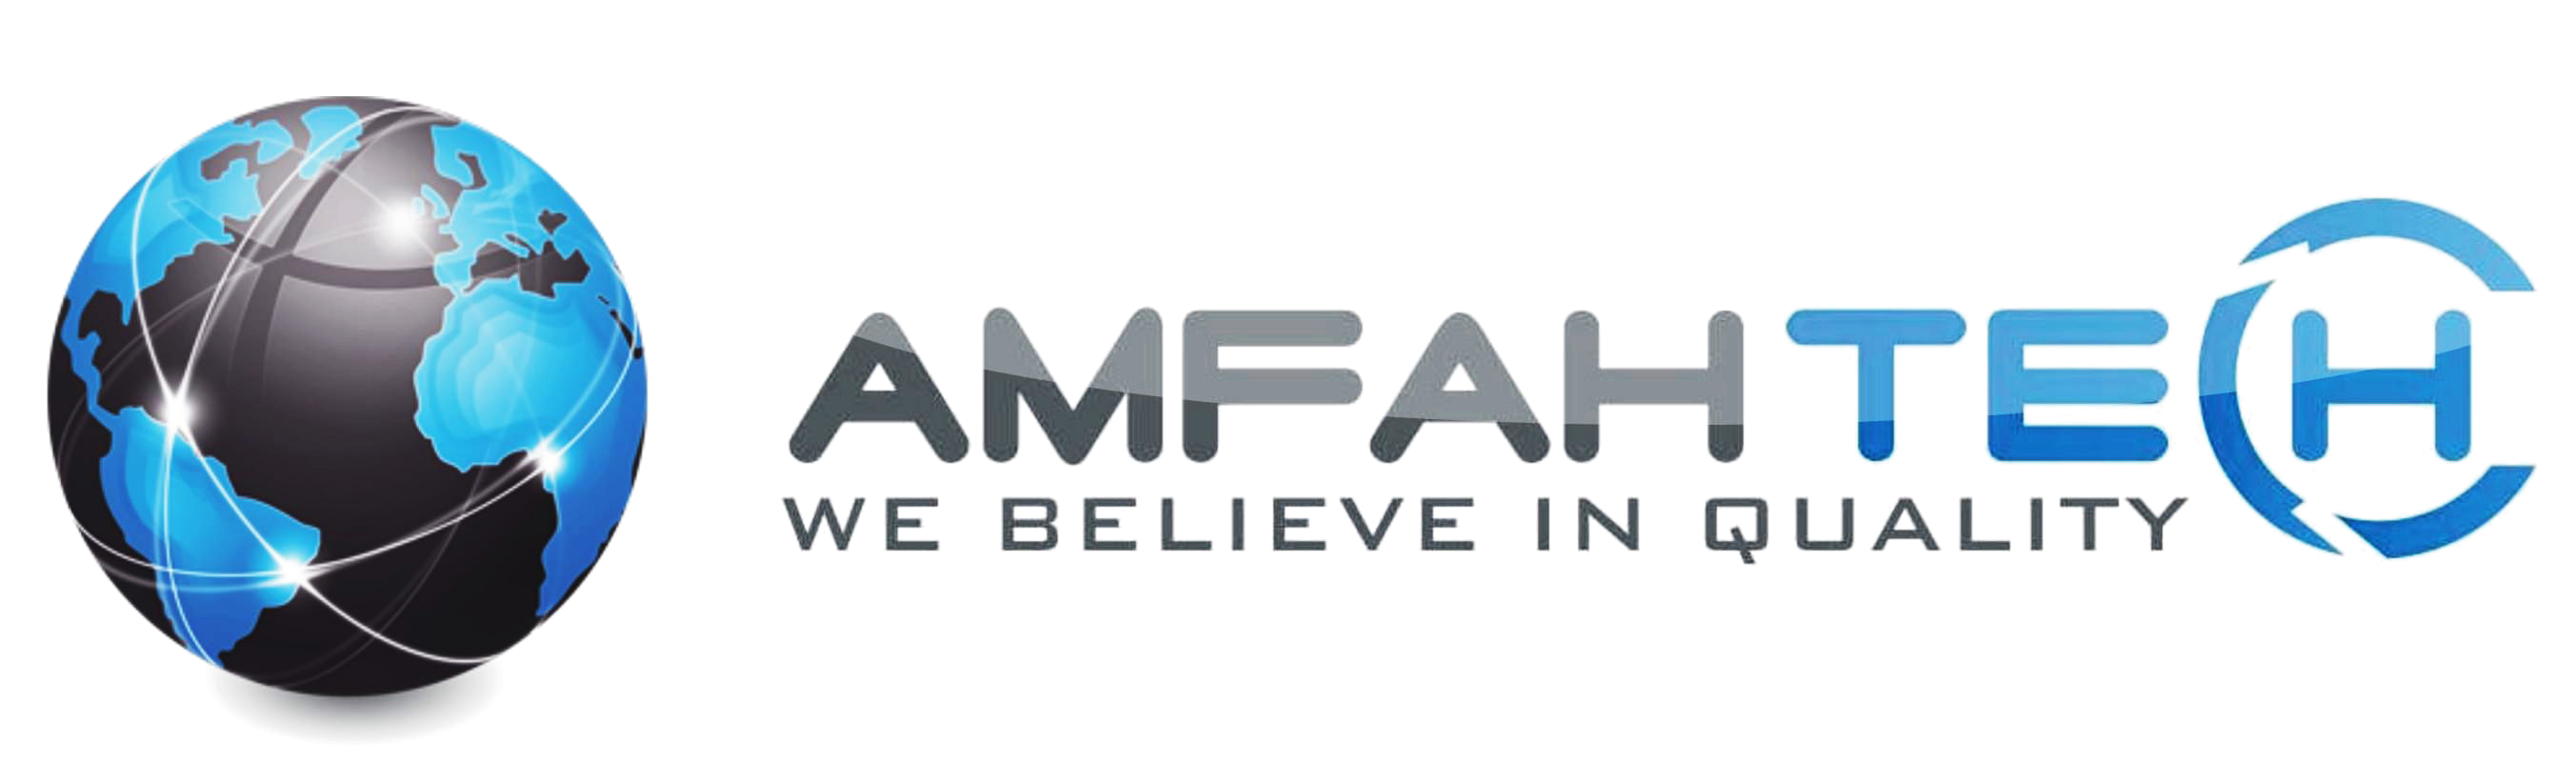 Amfahtech Ltd